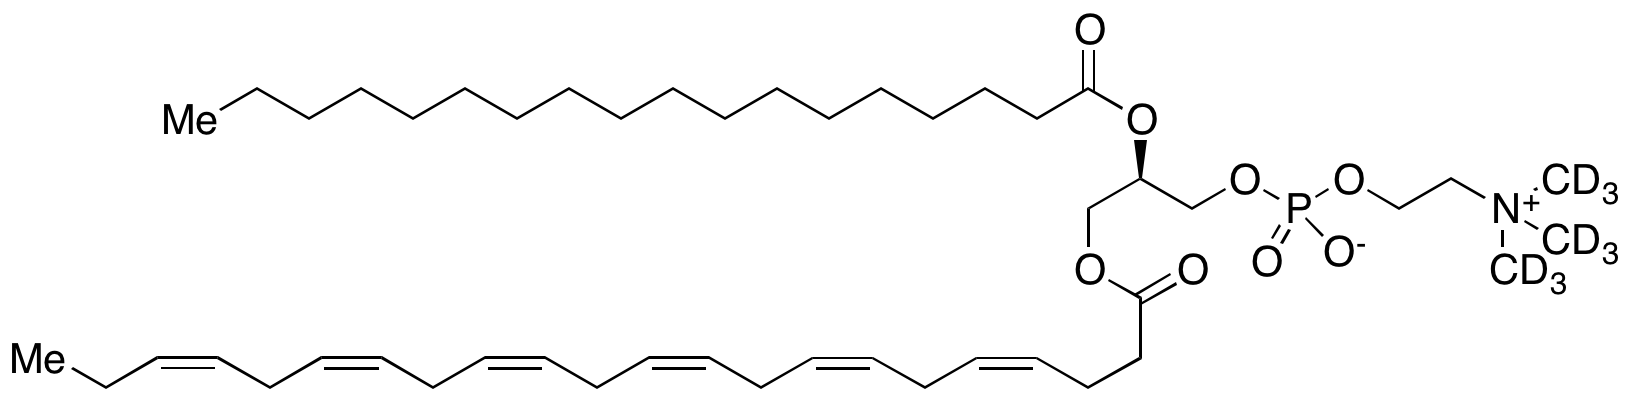 1-Docosahexaenoyl-2-stearoyl-sn-glycero-3-phosphocholine-d9